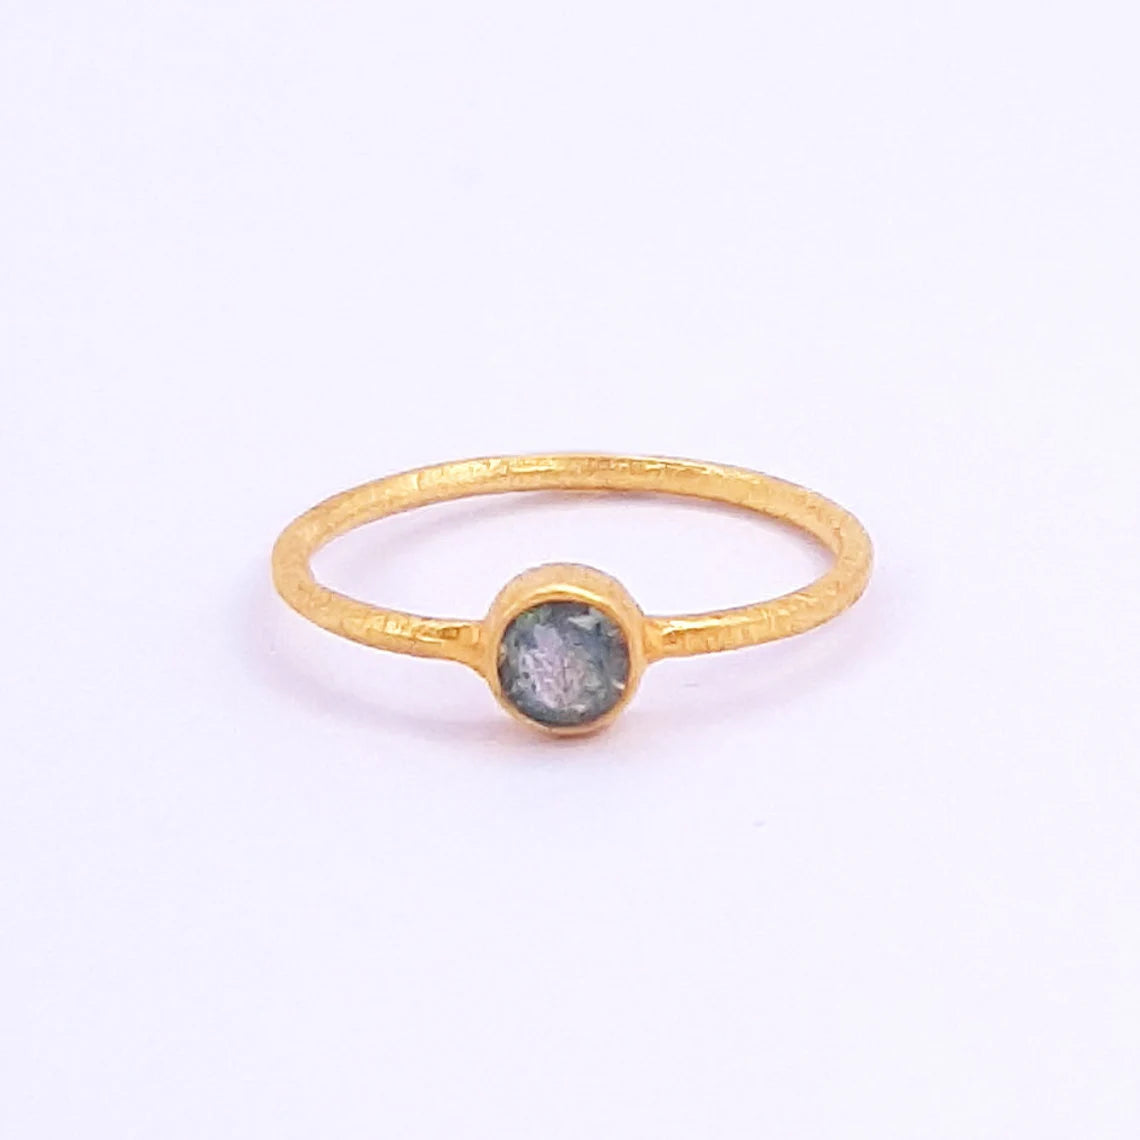 Labradorite Gemstone Ring - 925 Sterling Silver Labradorite Gold Ring - Round Labradorite Ring